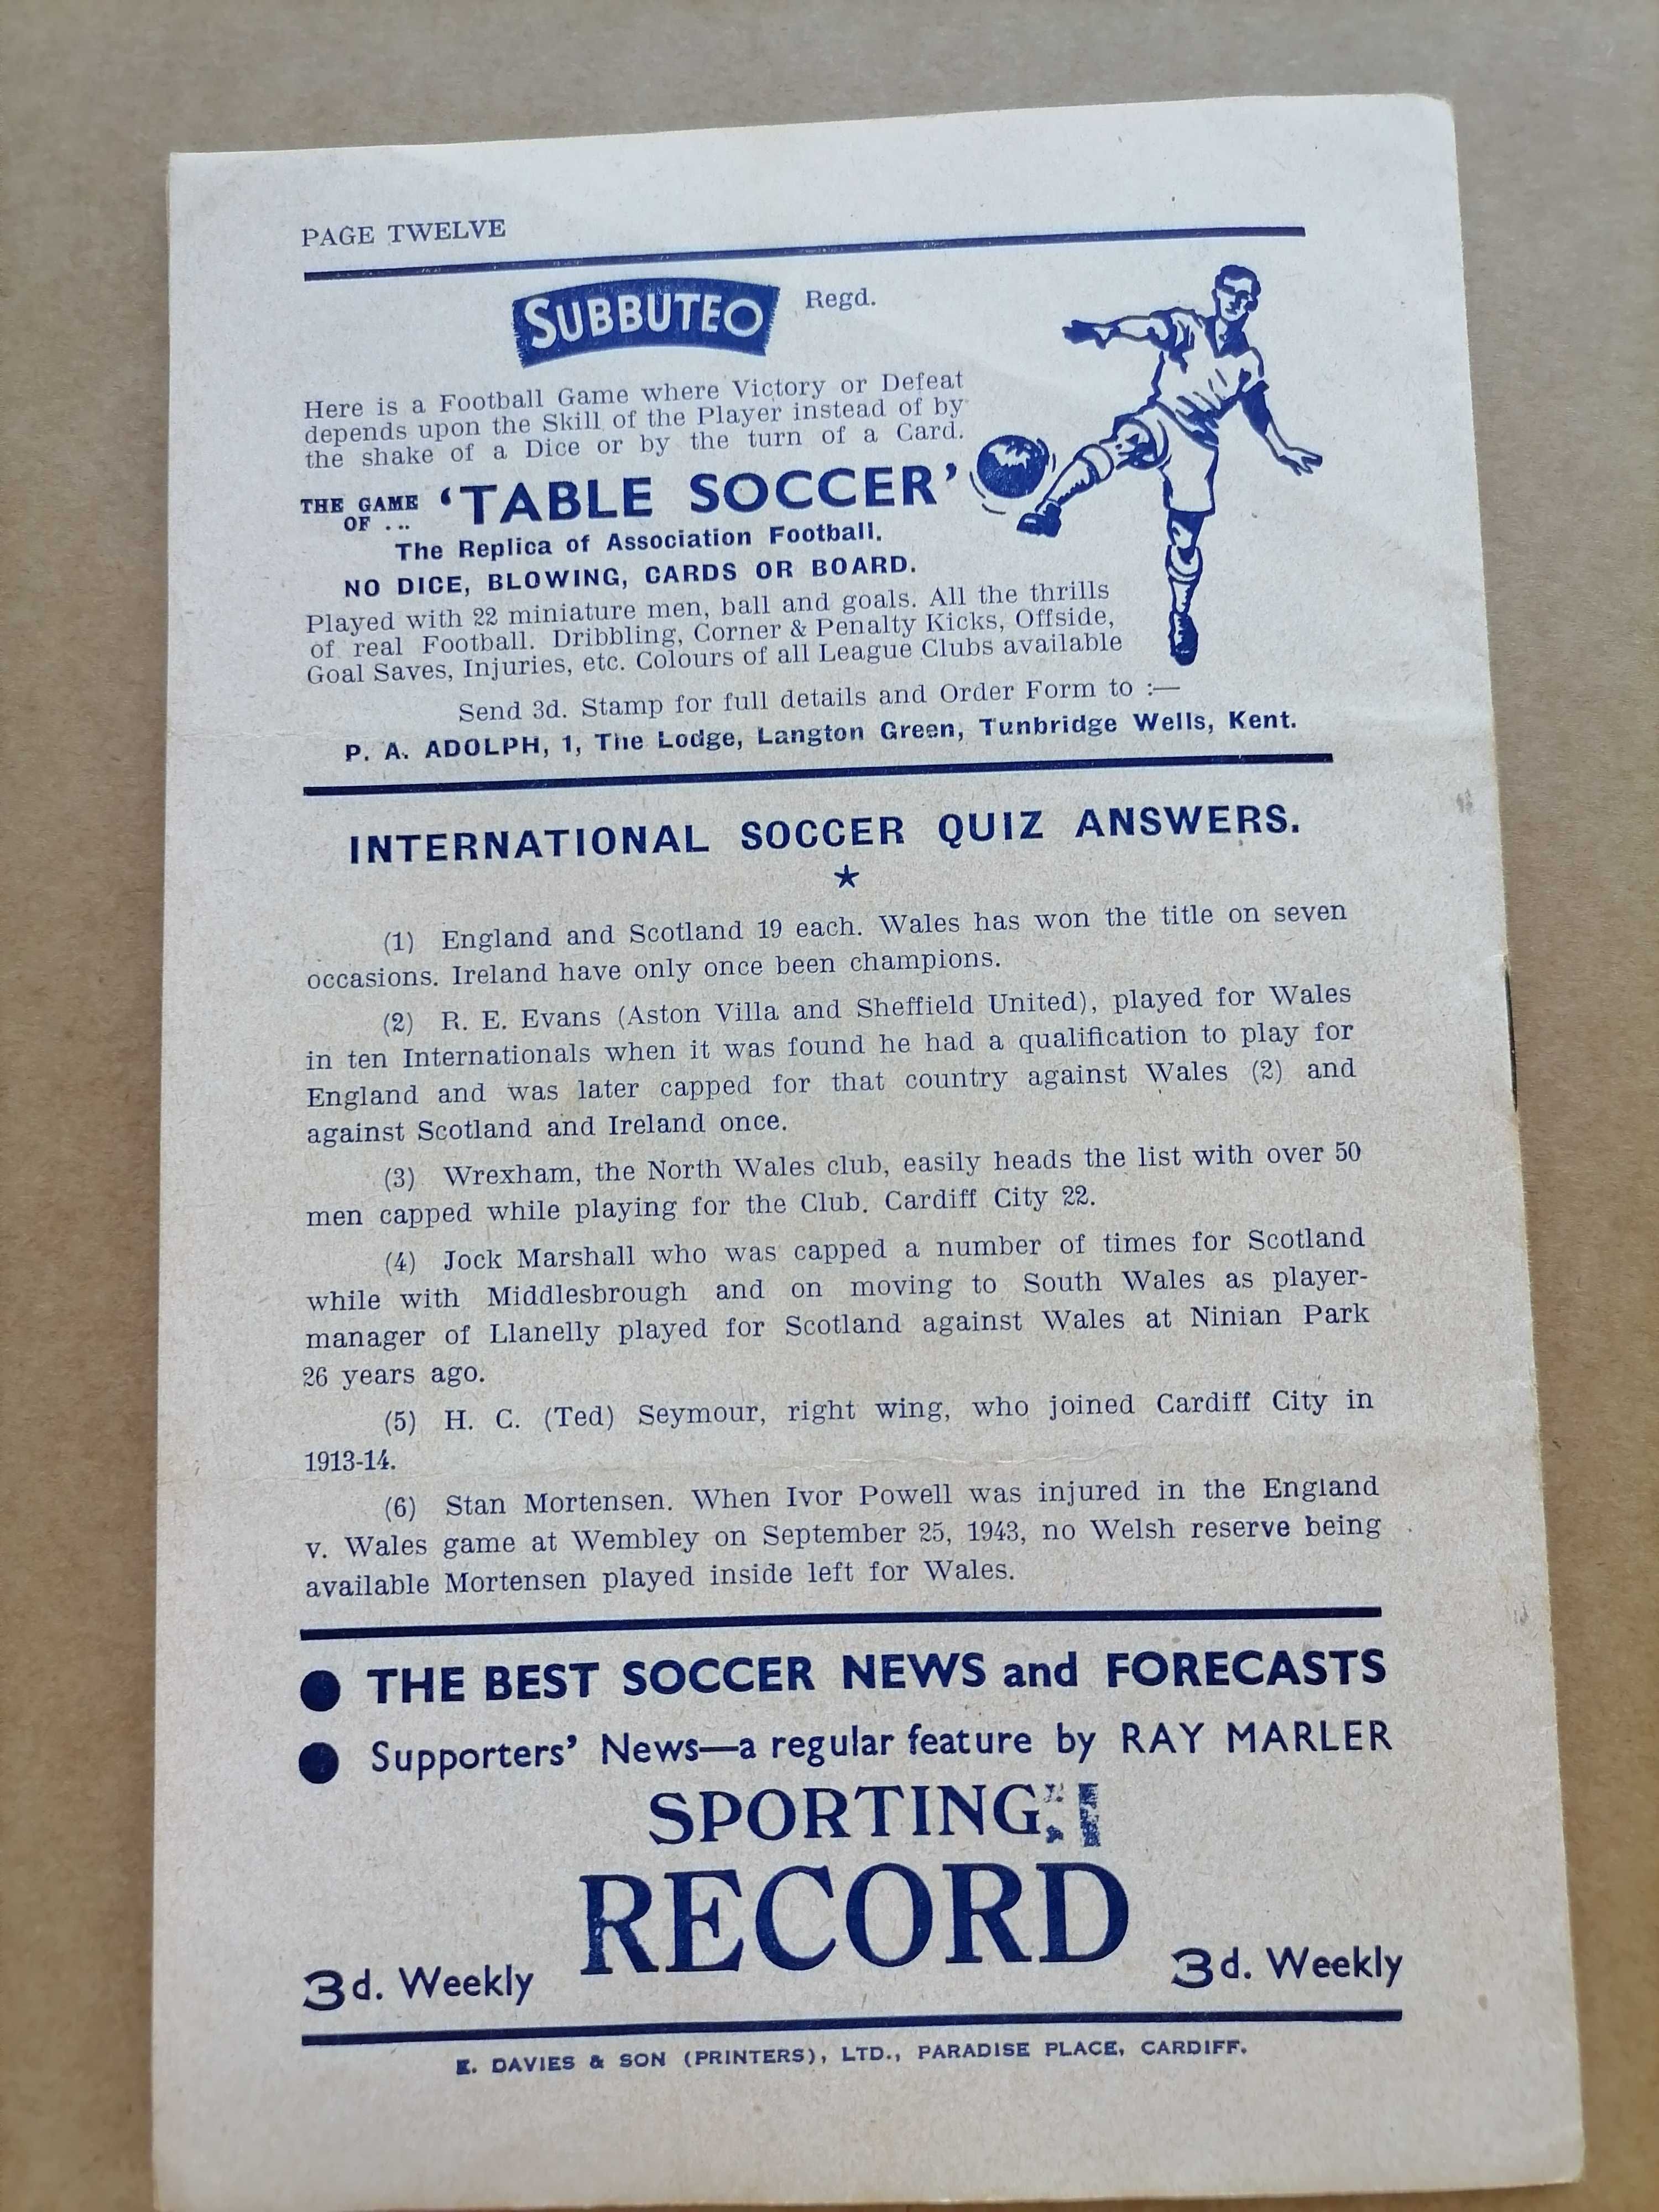 Official Programme WALES vs PORTUGAL 1951 International Football Match